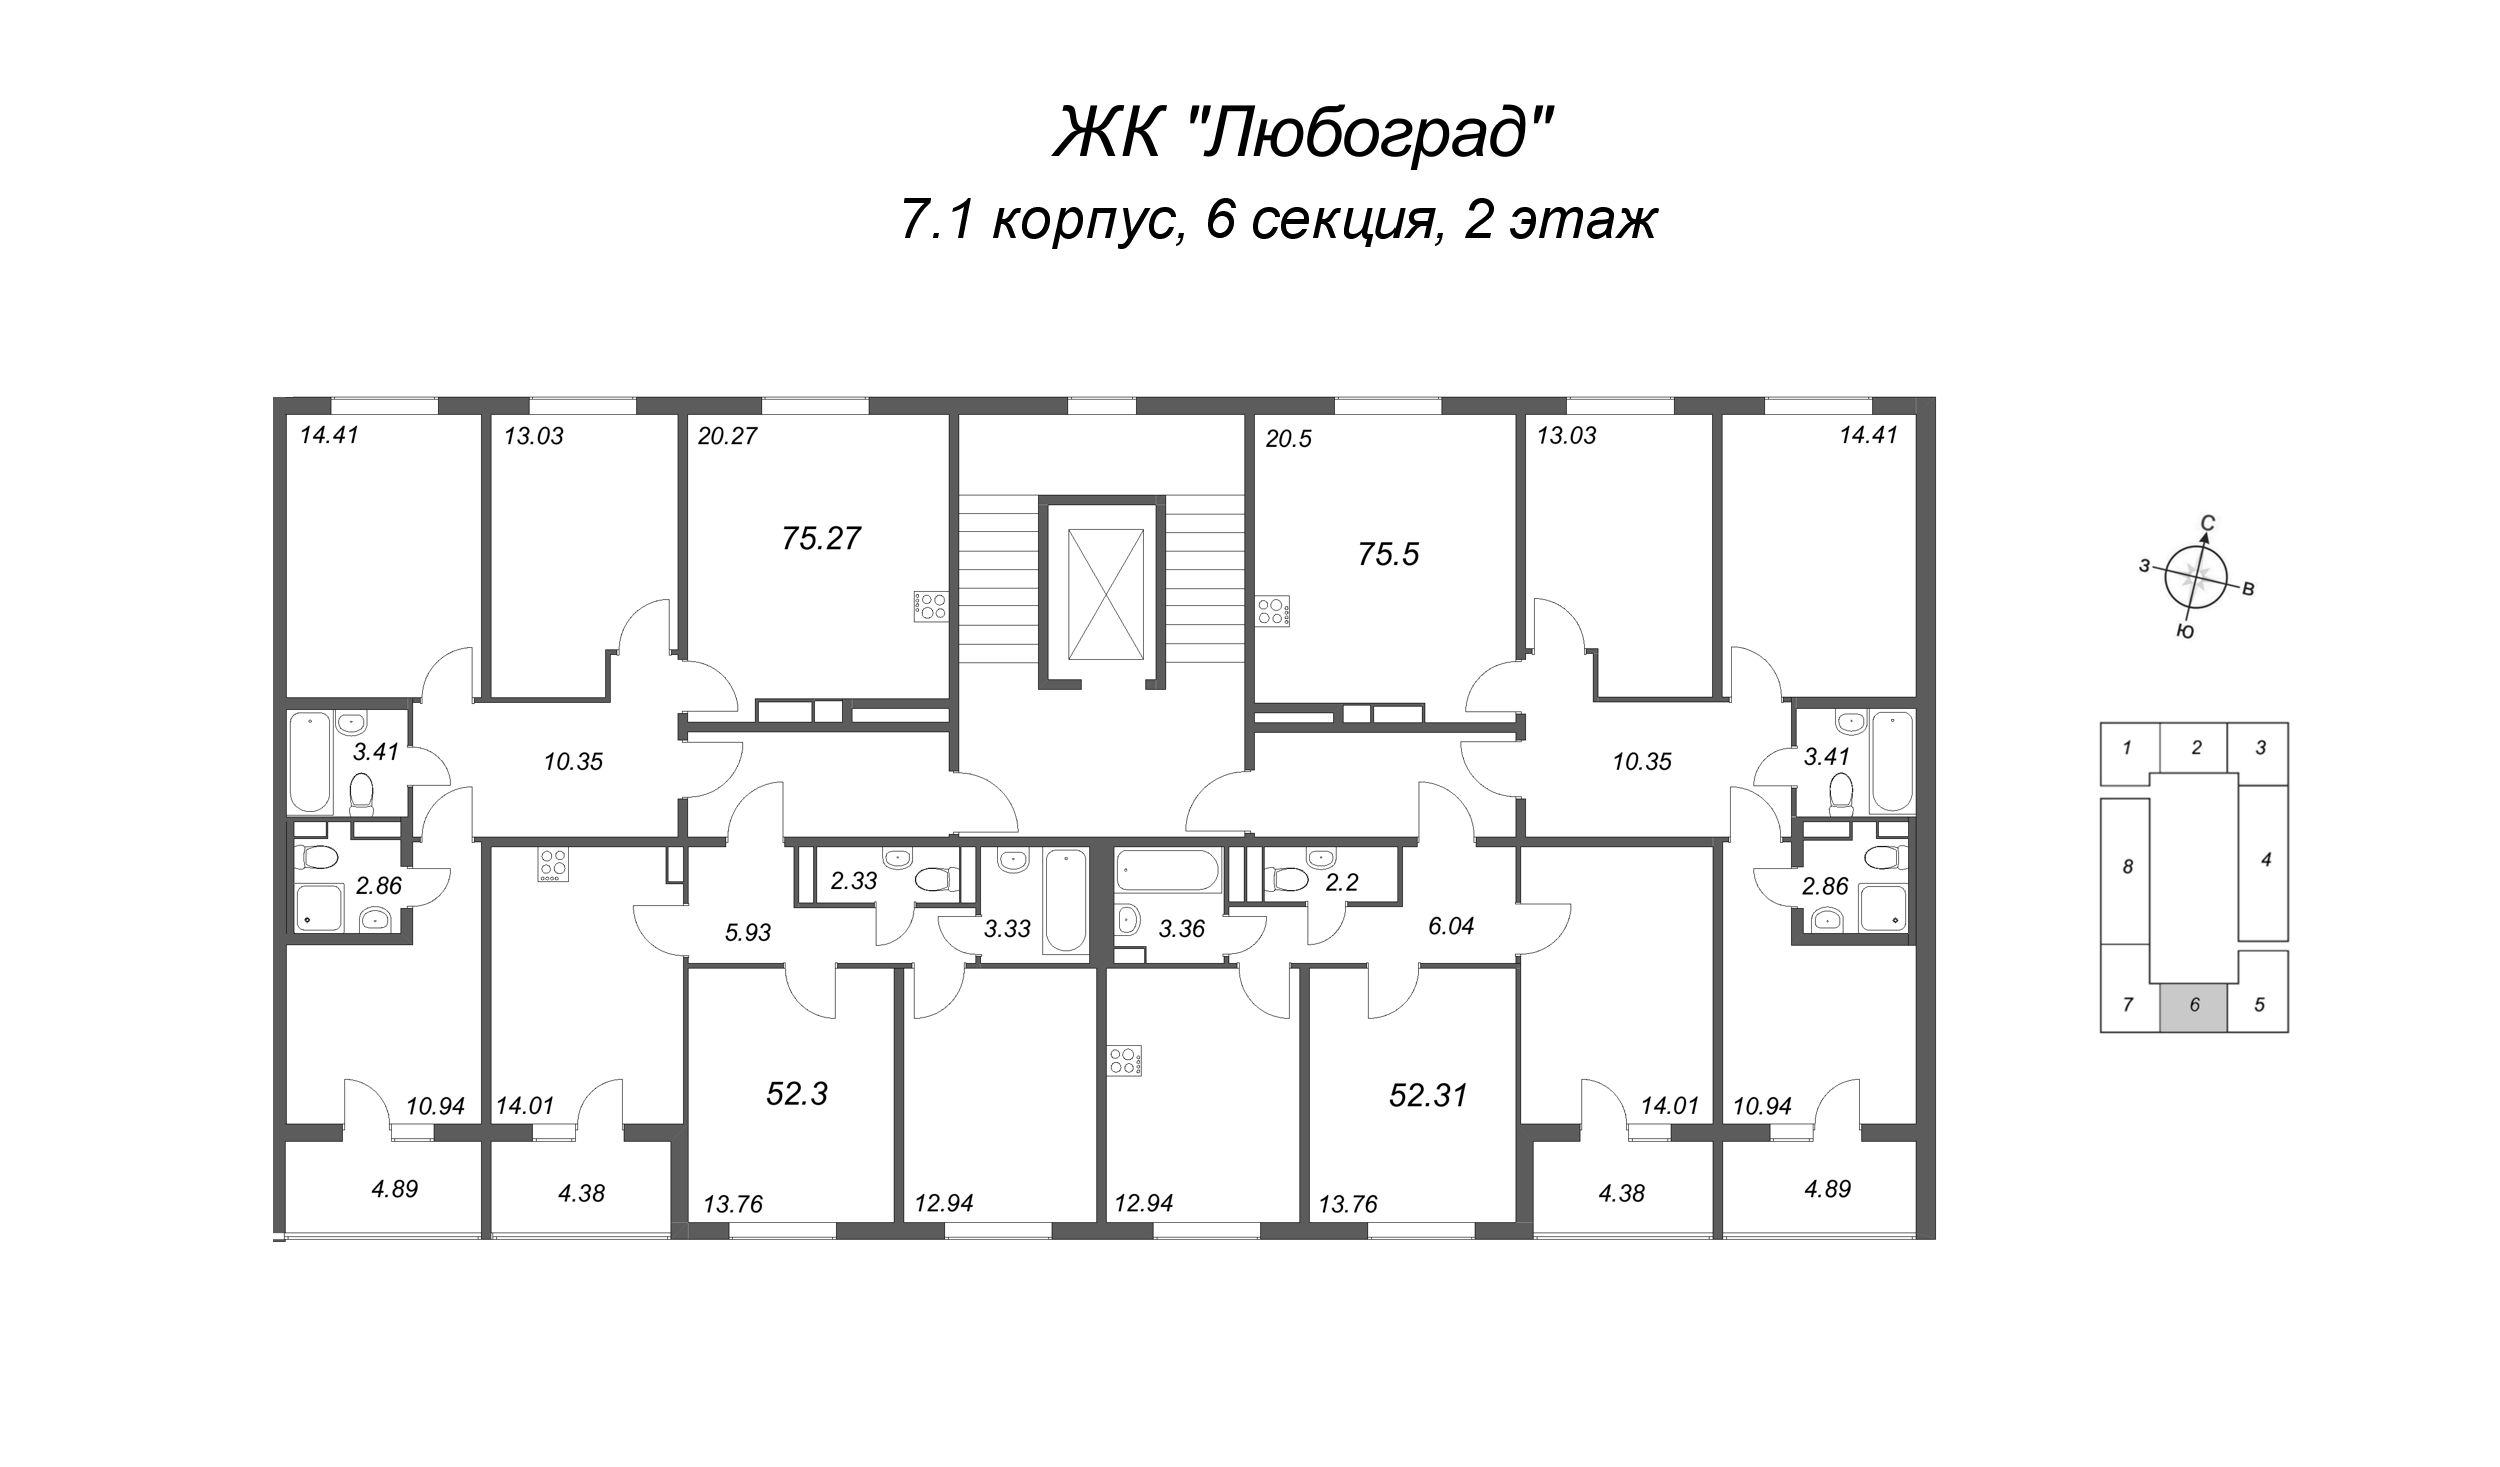 4-комнатная (Евро) квартира, 75.27 м² - планировка этажа